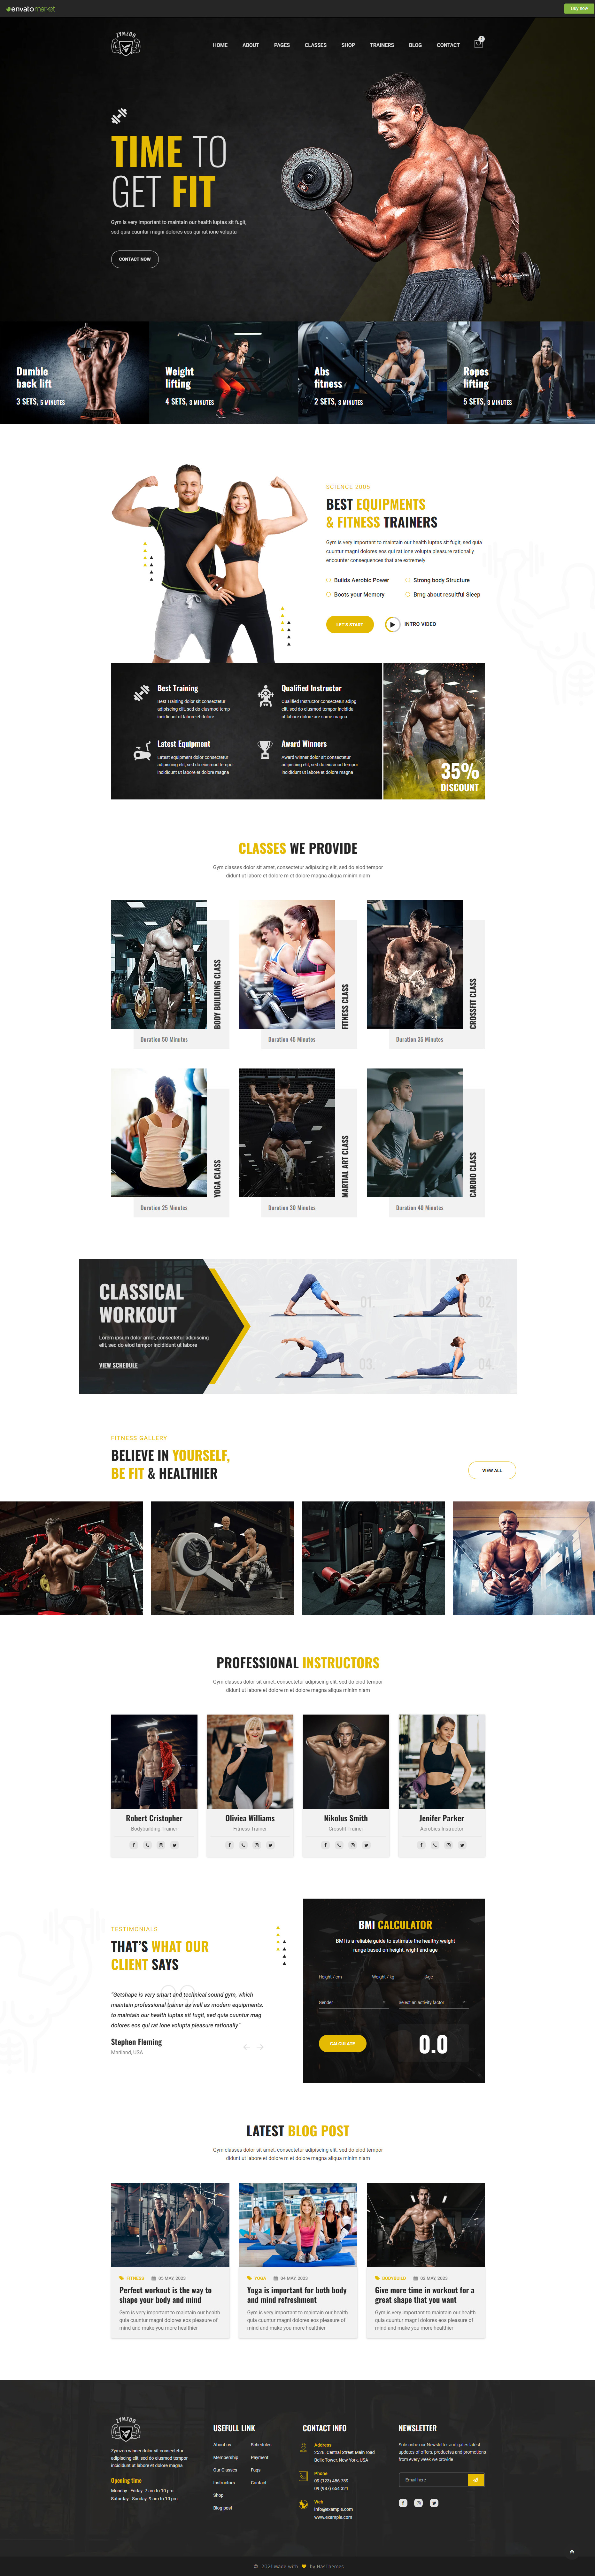 Premium theme for sports, gym, fitness